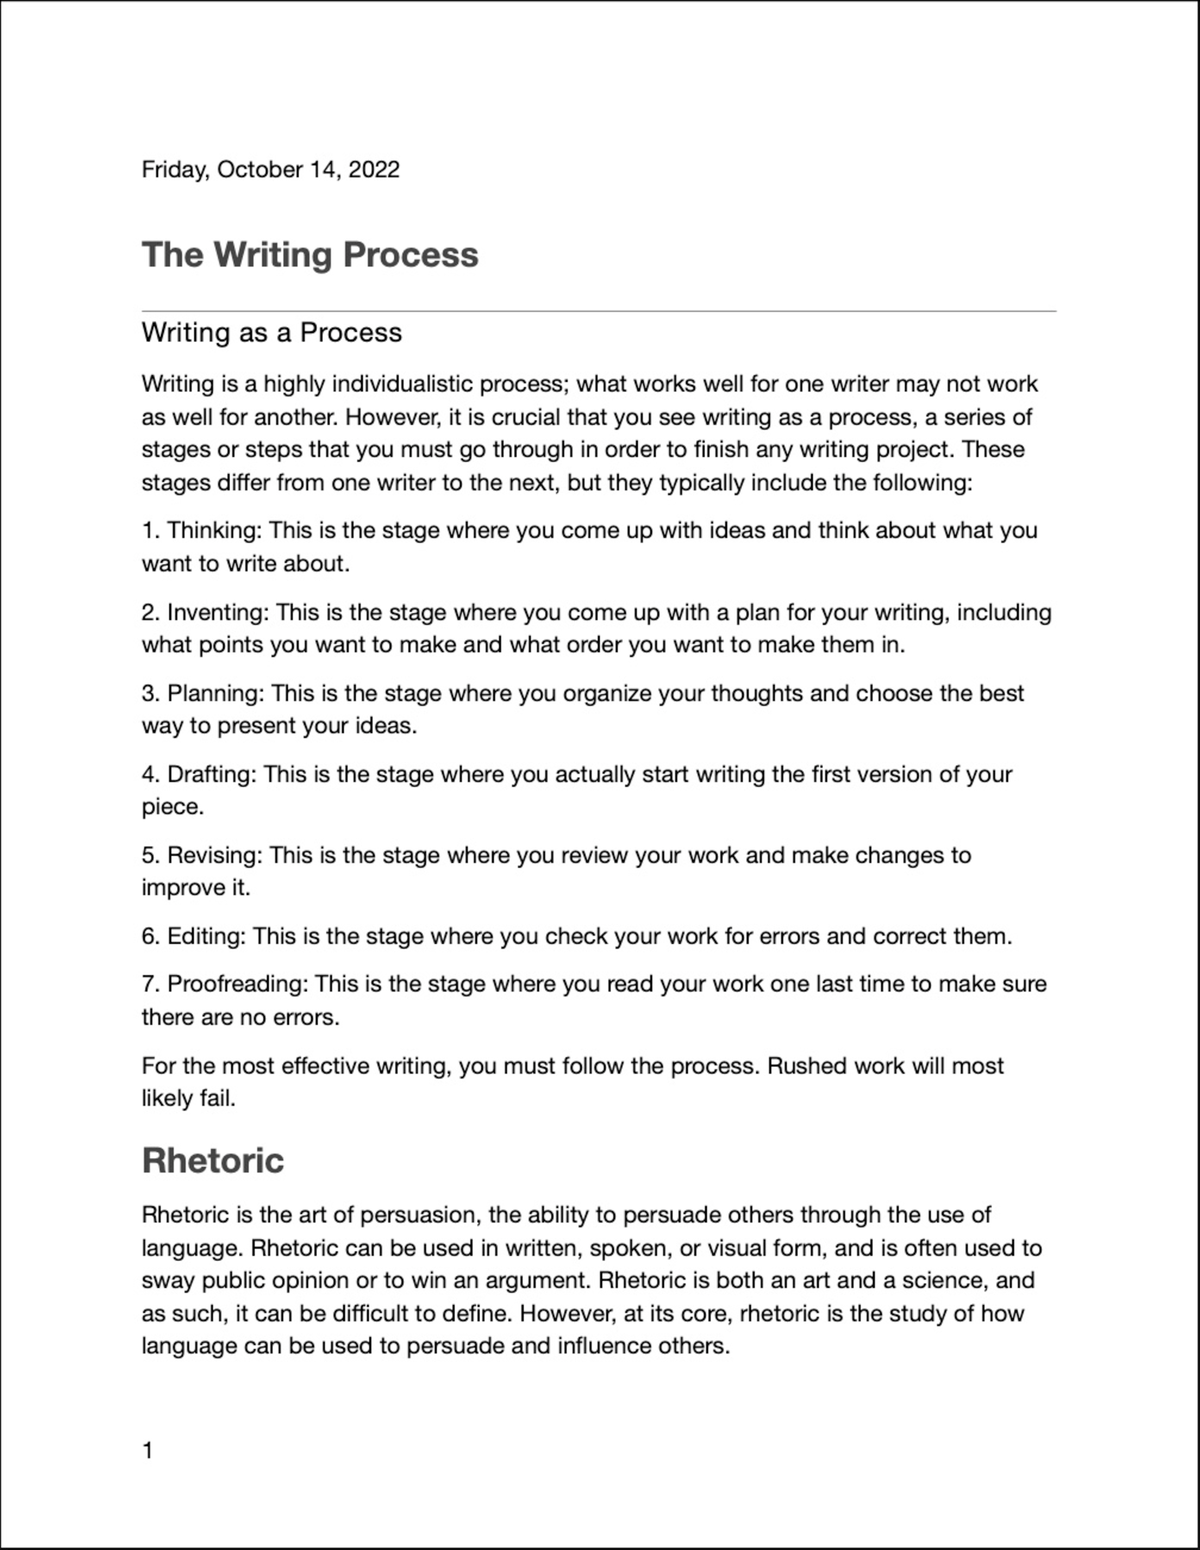 The Writing Process - ENC1101 - Studocu